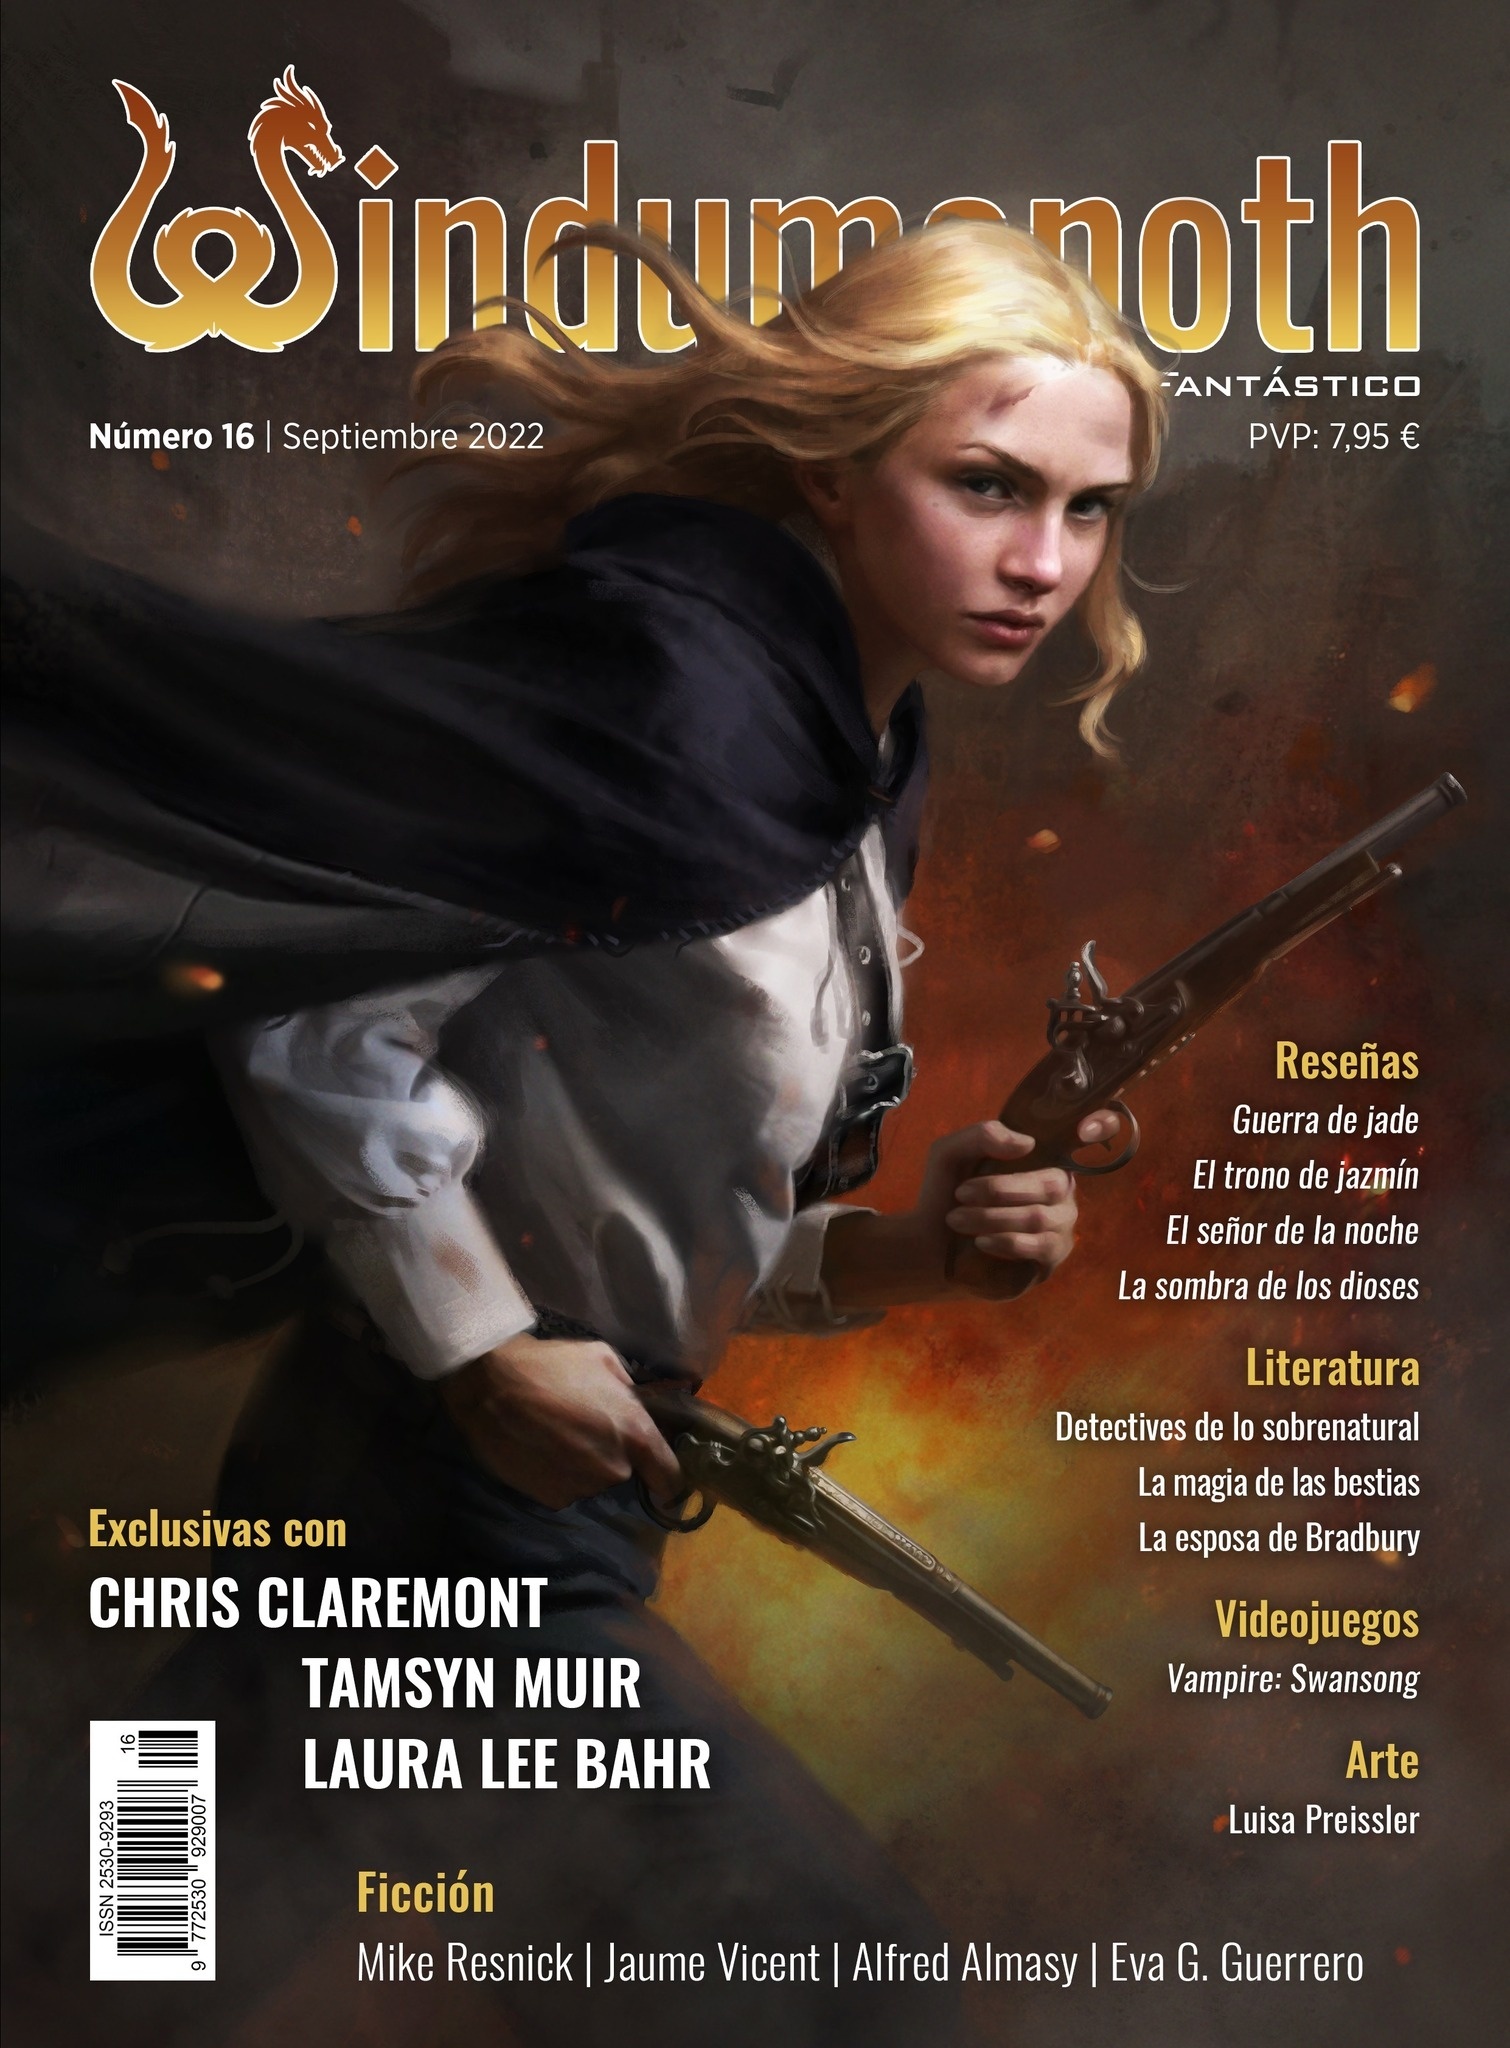 Windumanoth nº 16. Septiembre 2022 "Revista de género fantástico". 